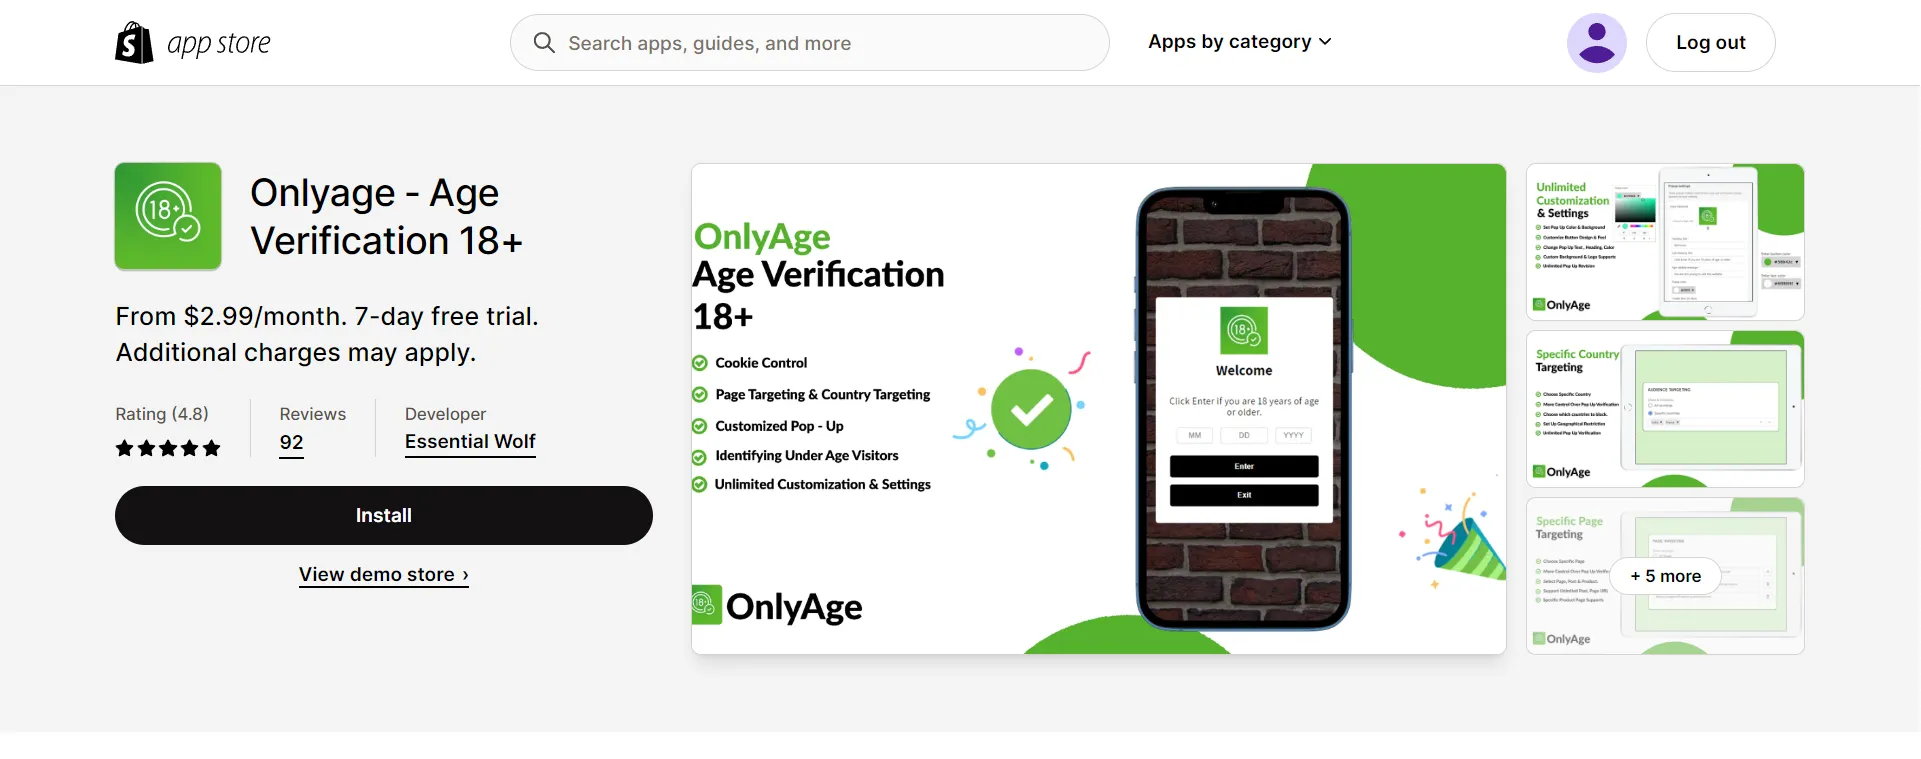 Onlyage ‑ Age Verification